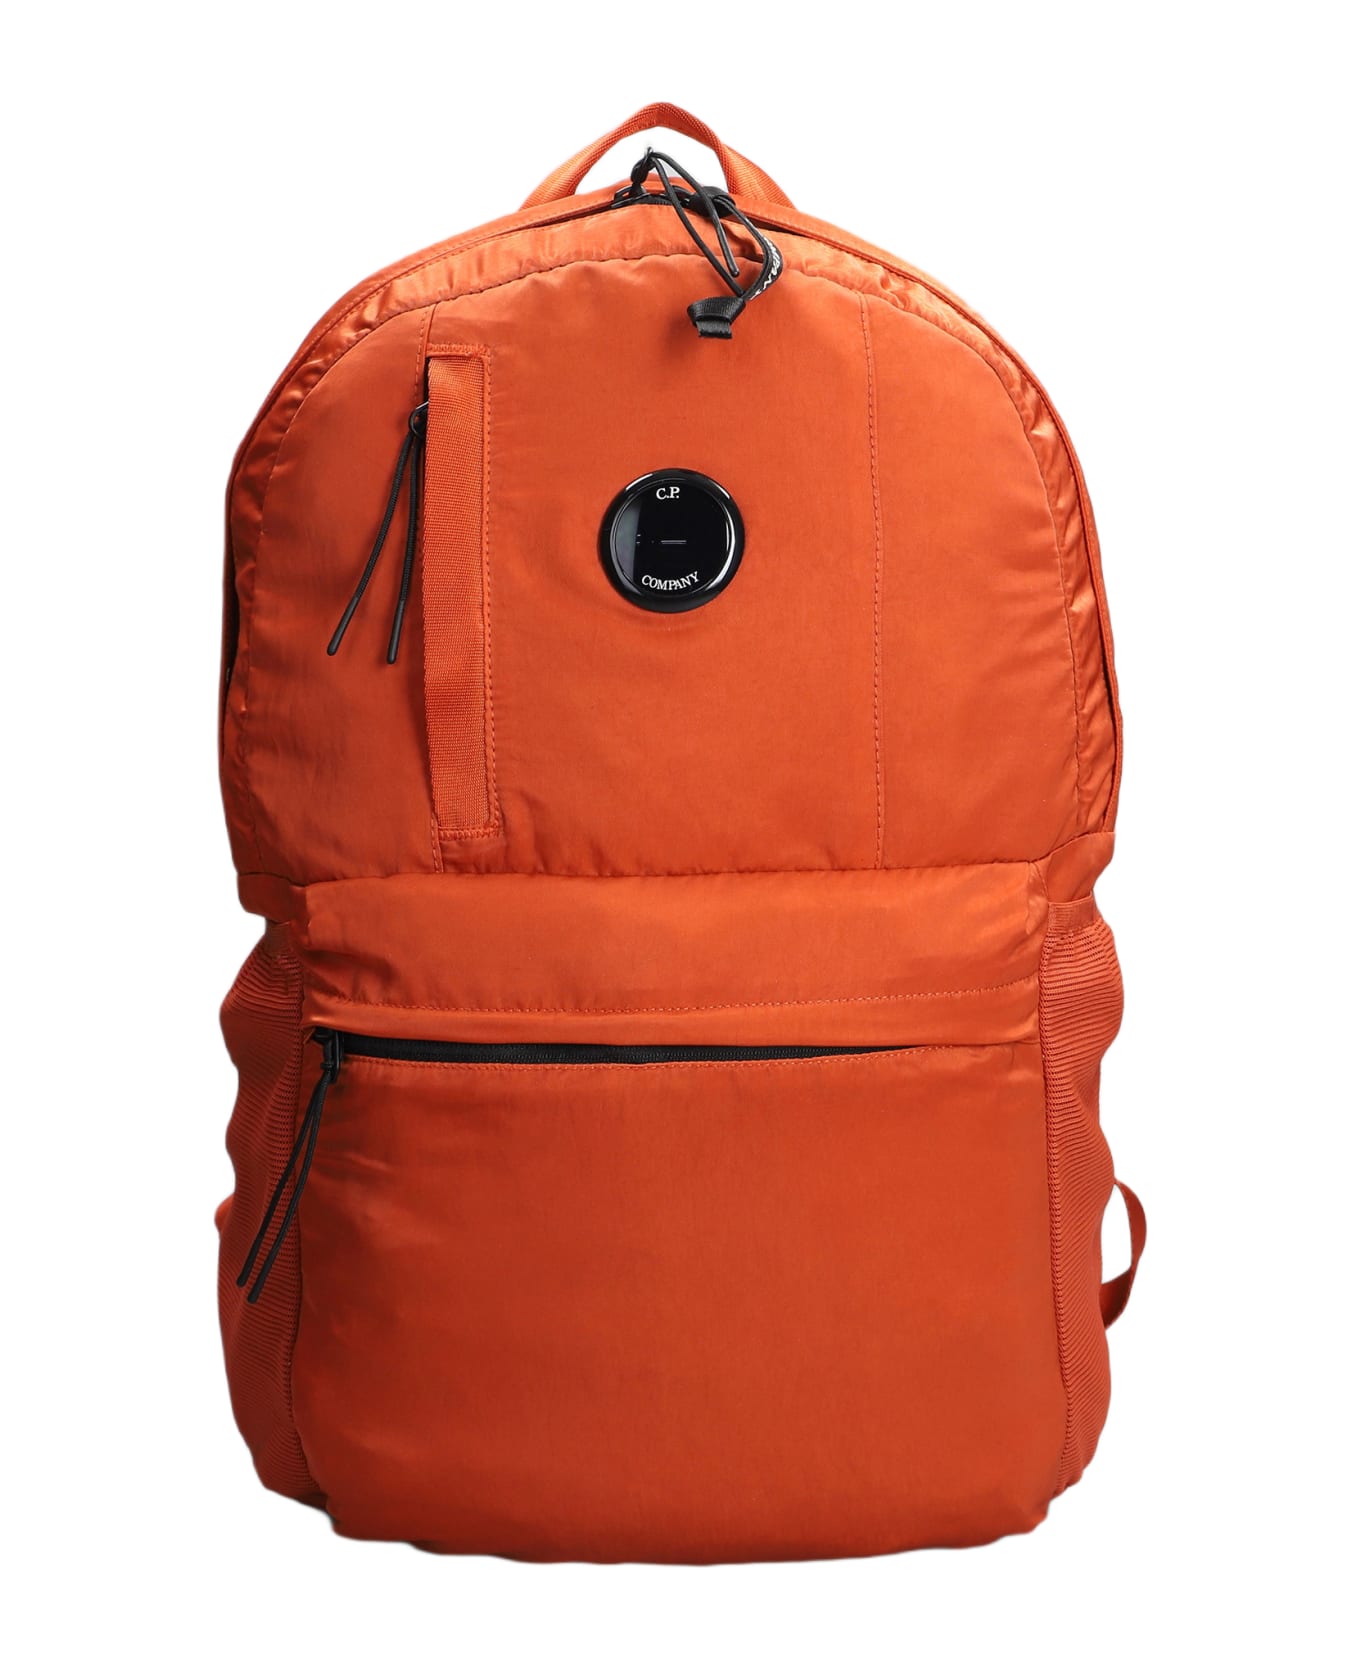 C.P. Company Nylon B Backpack In Orange Polyester - orange バックパック